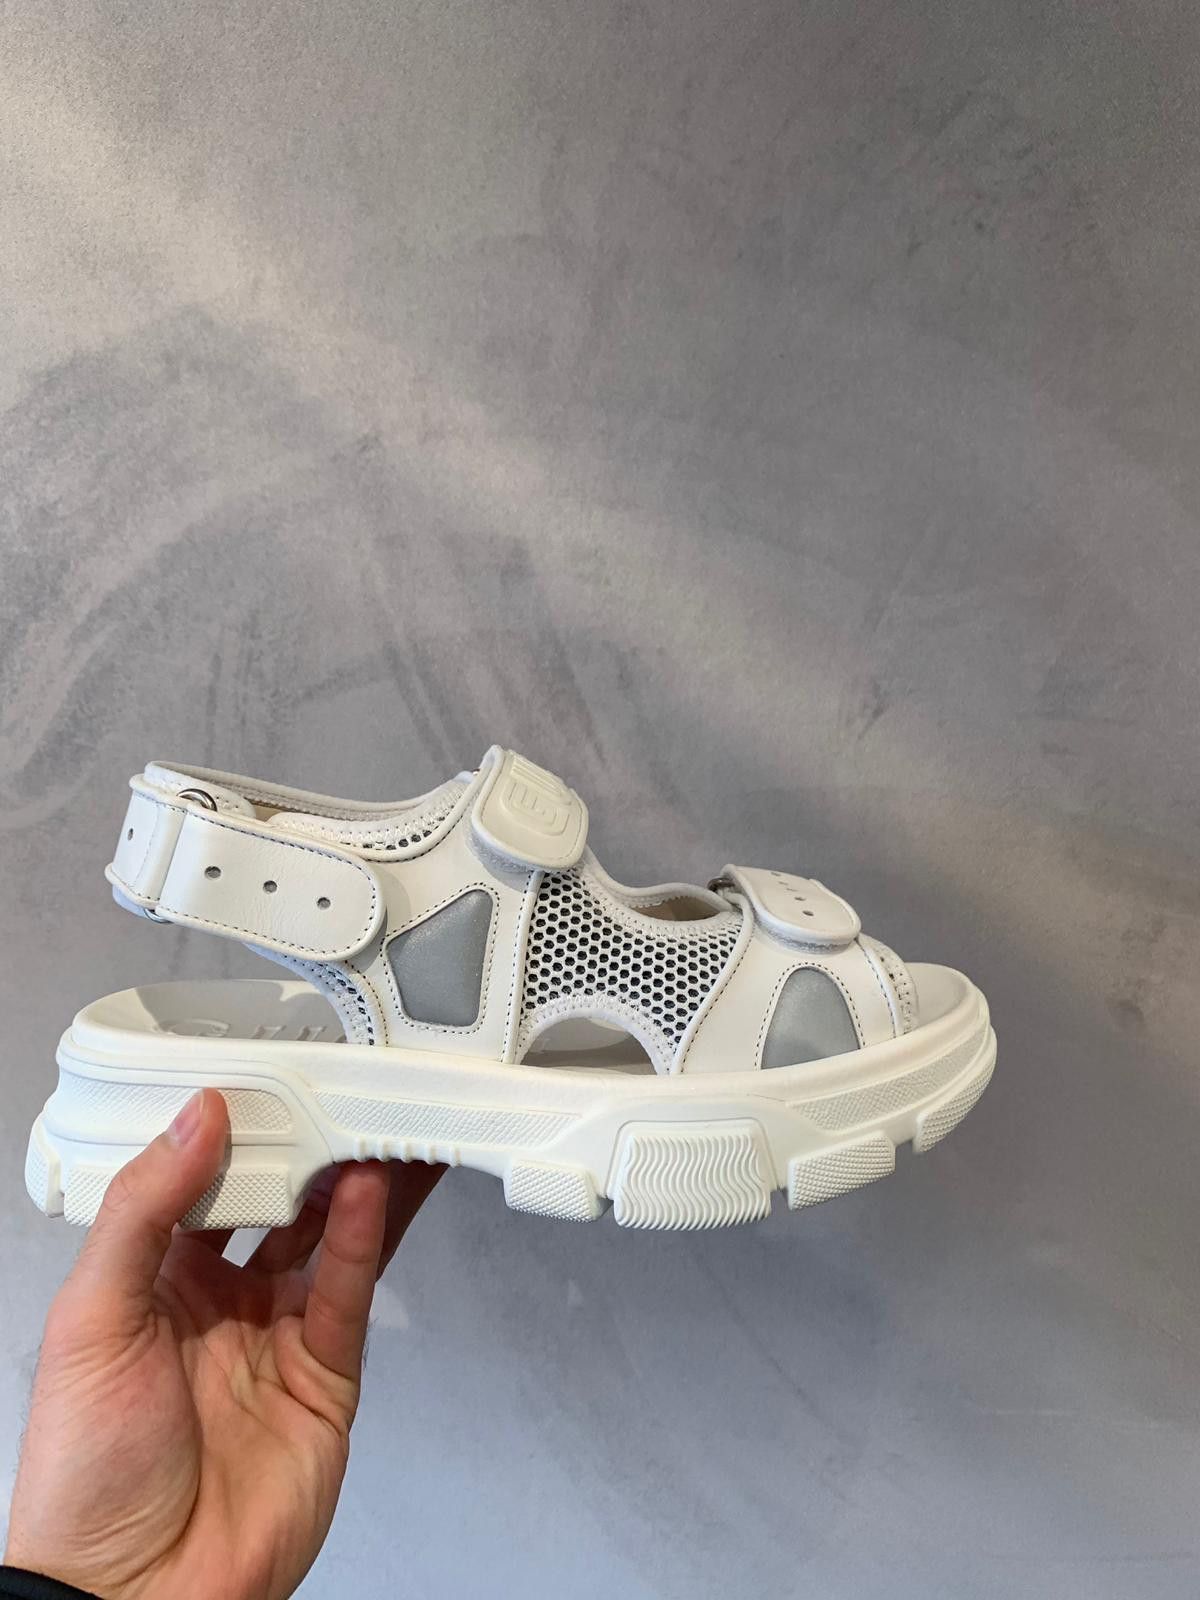 Gucci Flashtrek Sandals in White | Grailed